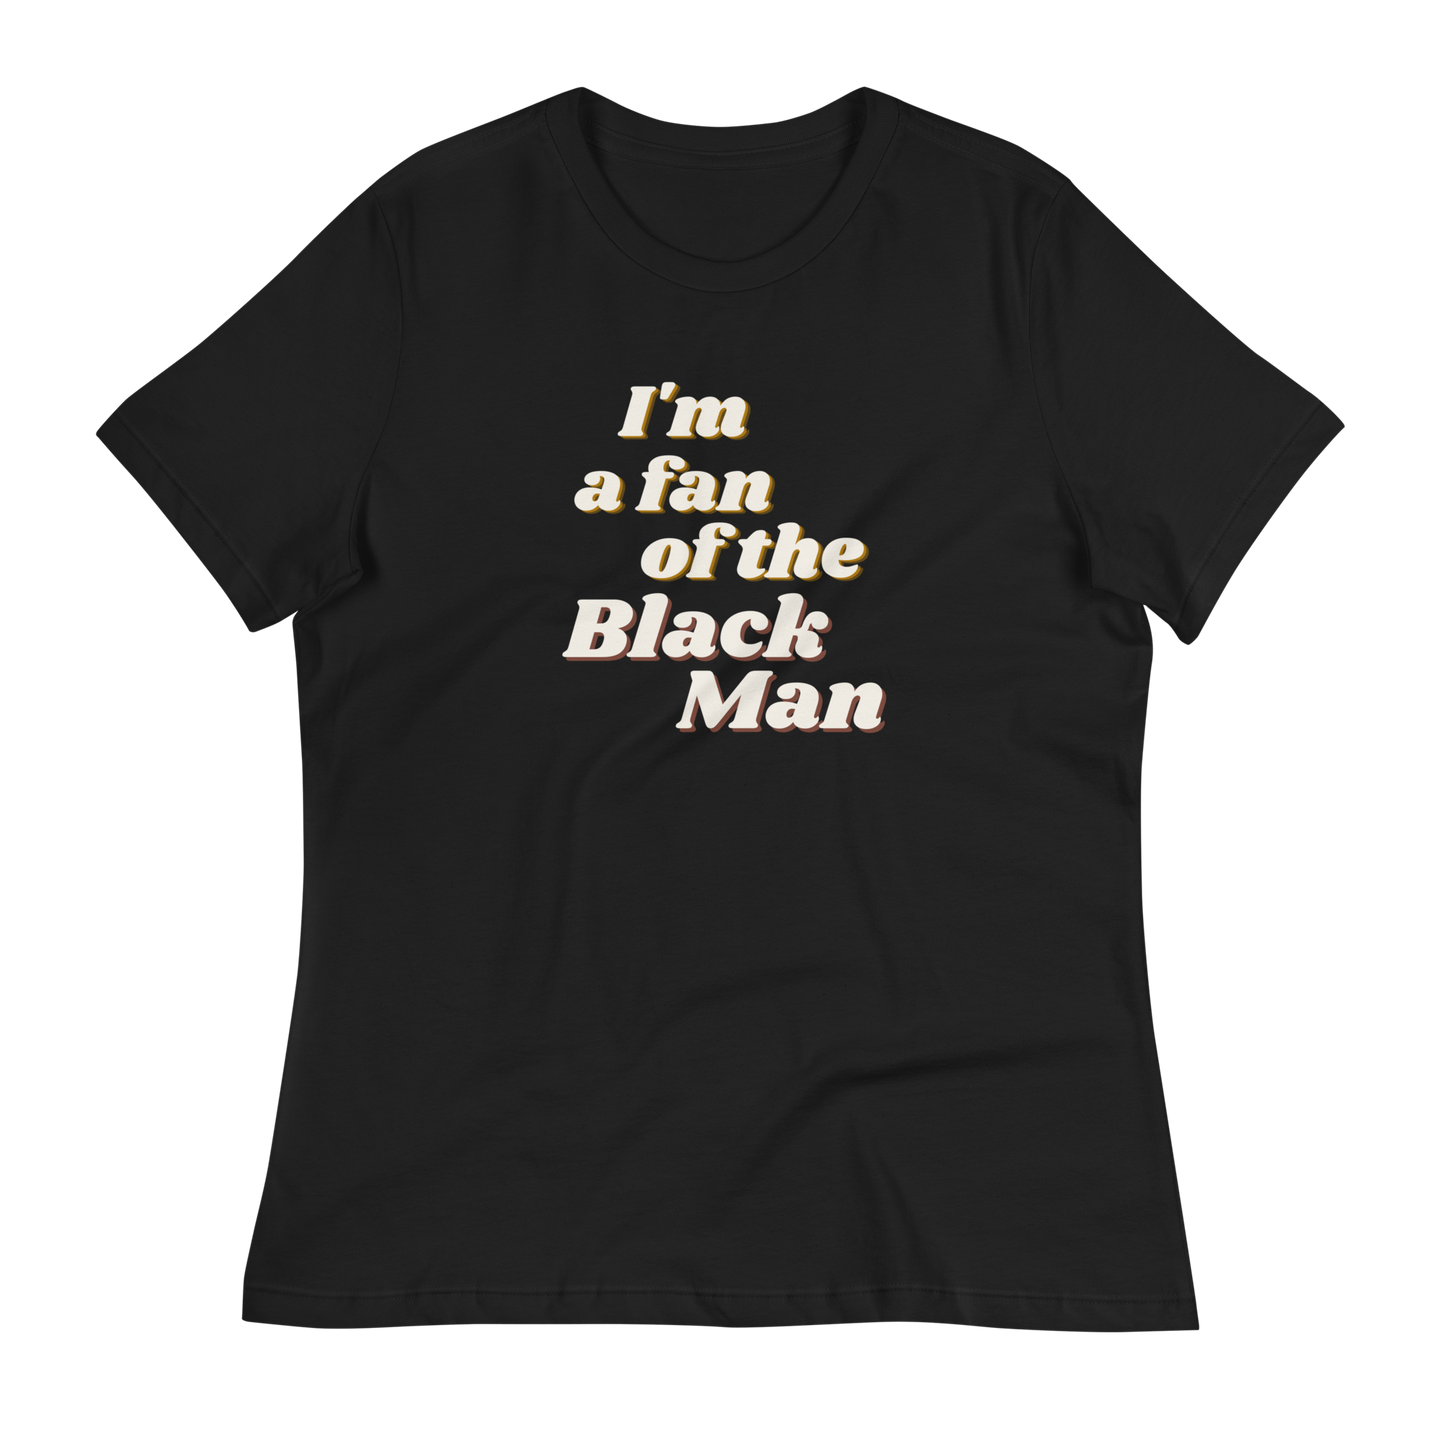 I'm a Fan of the Black Man T-Shirt